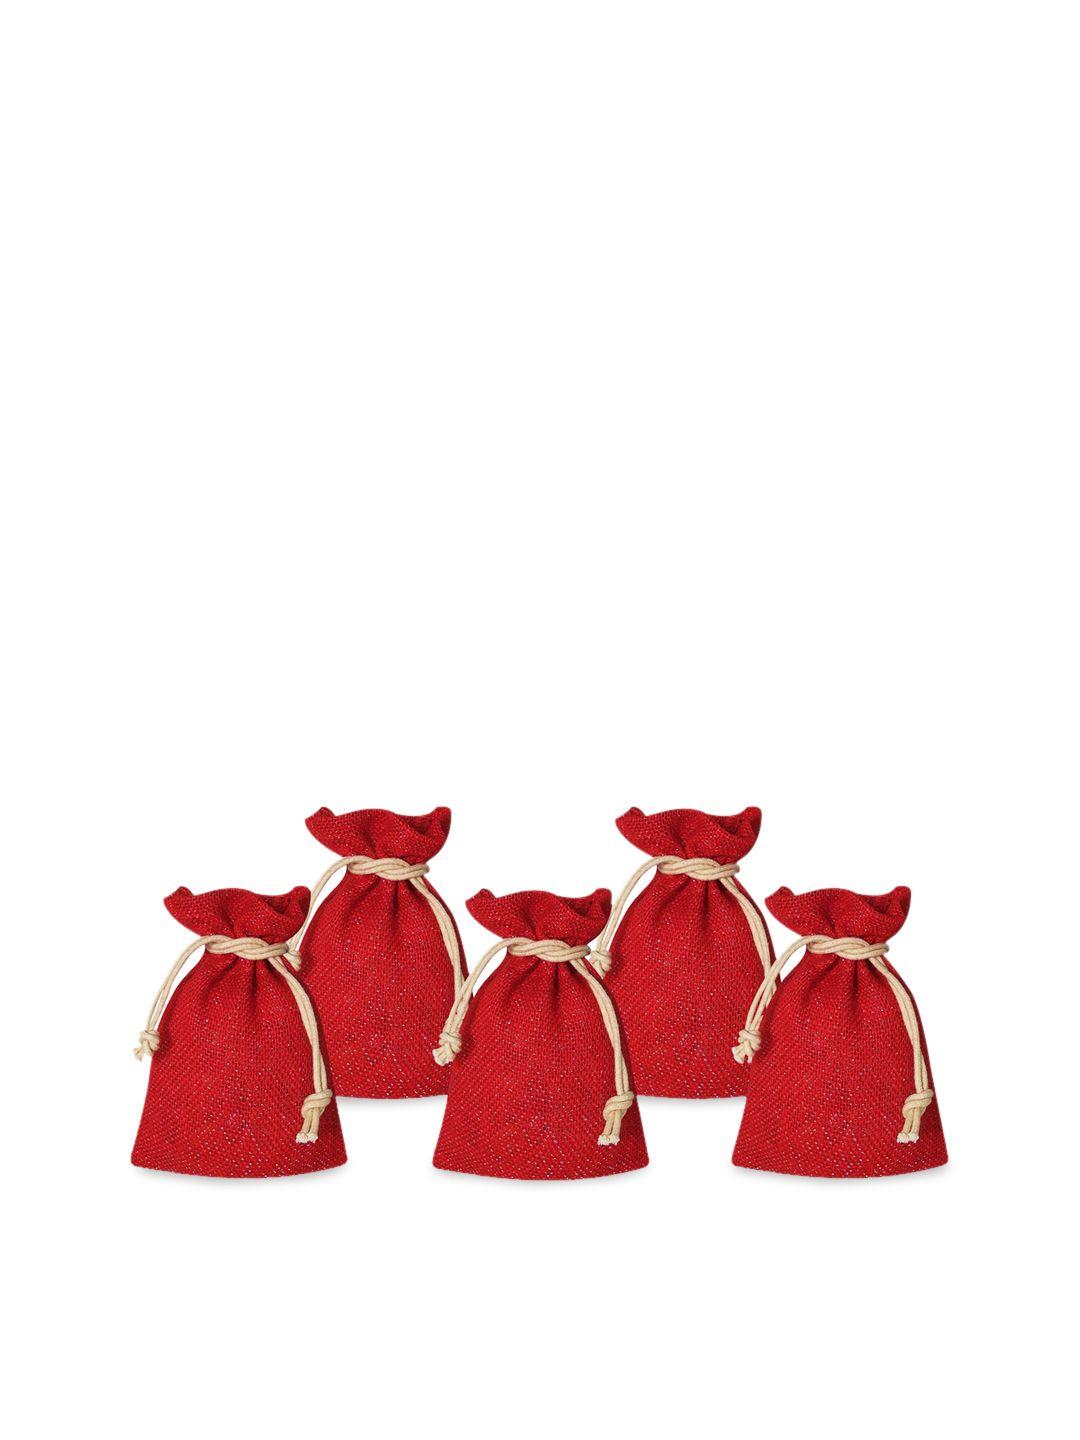 earthbags set of 5 red jute potli clutch